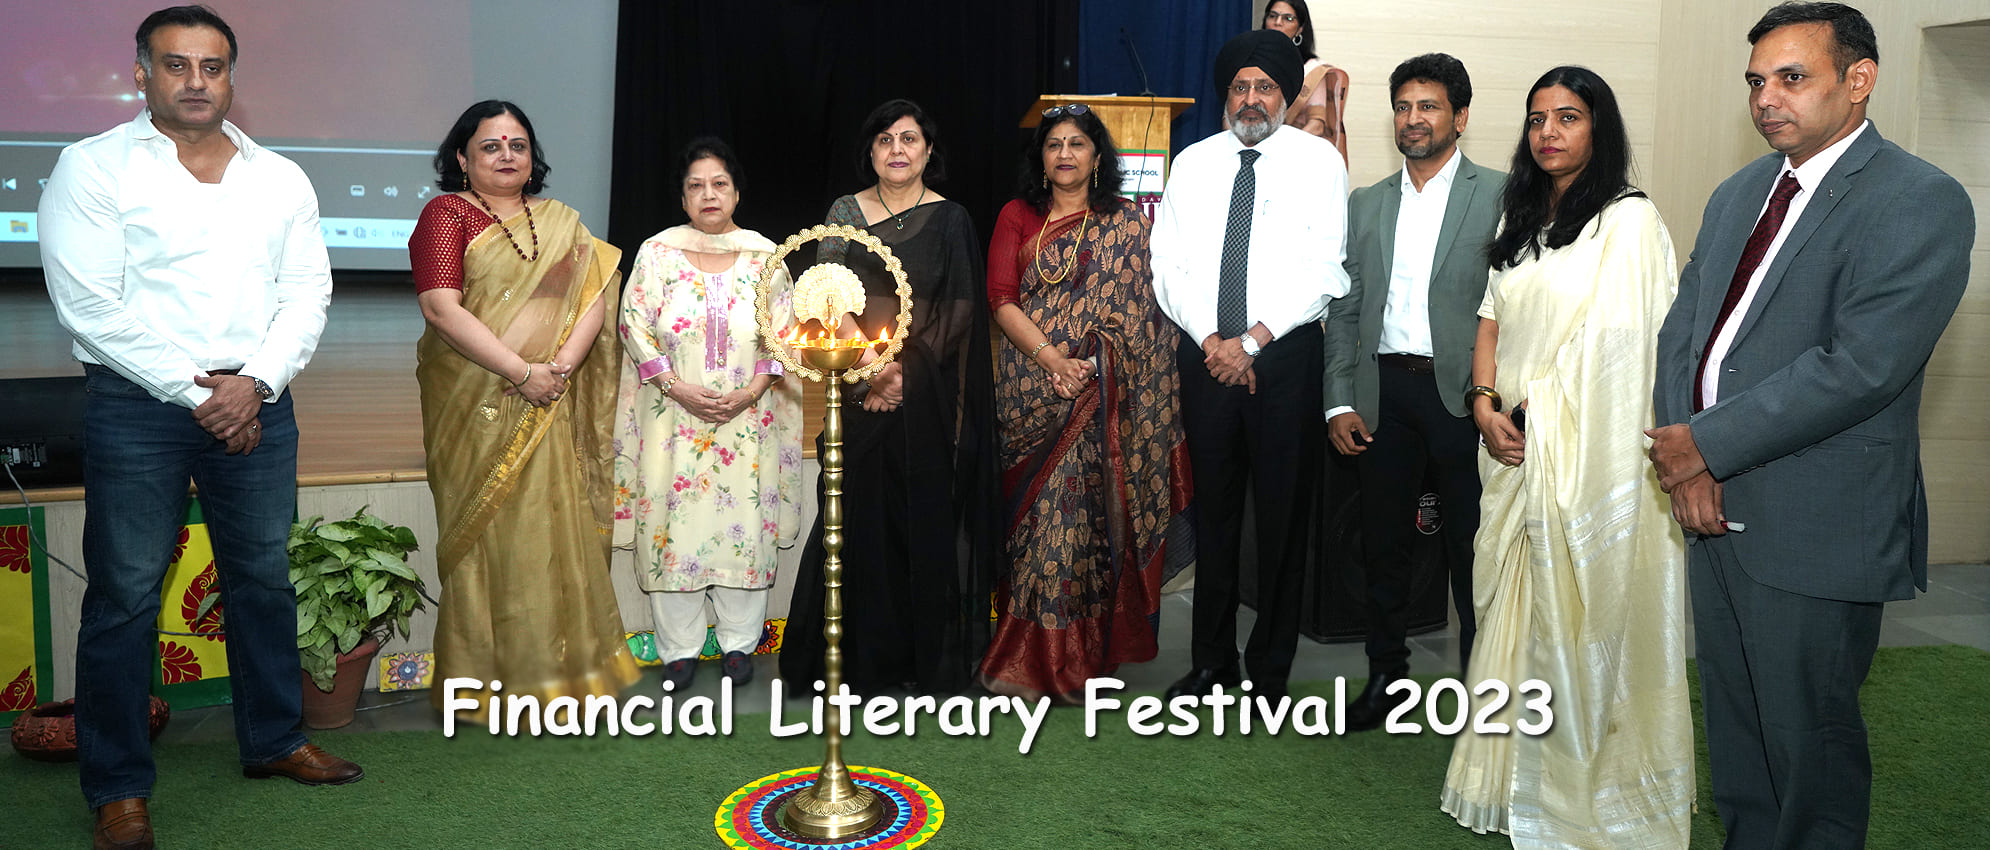 Financial Literary Festival 2023